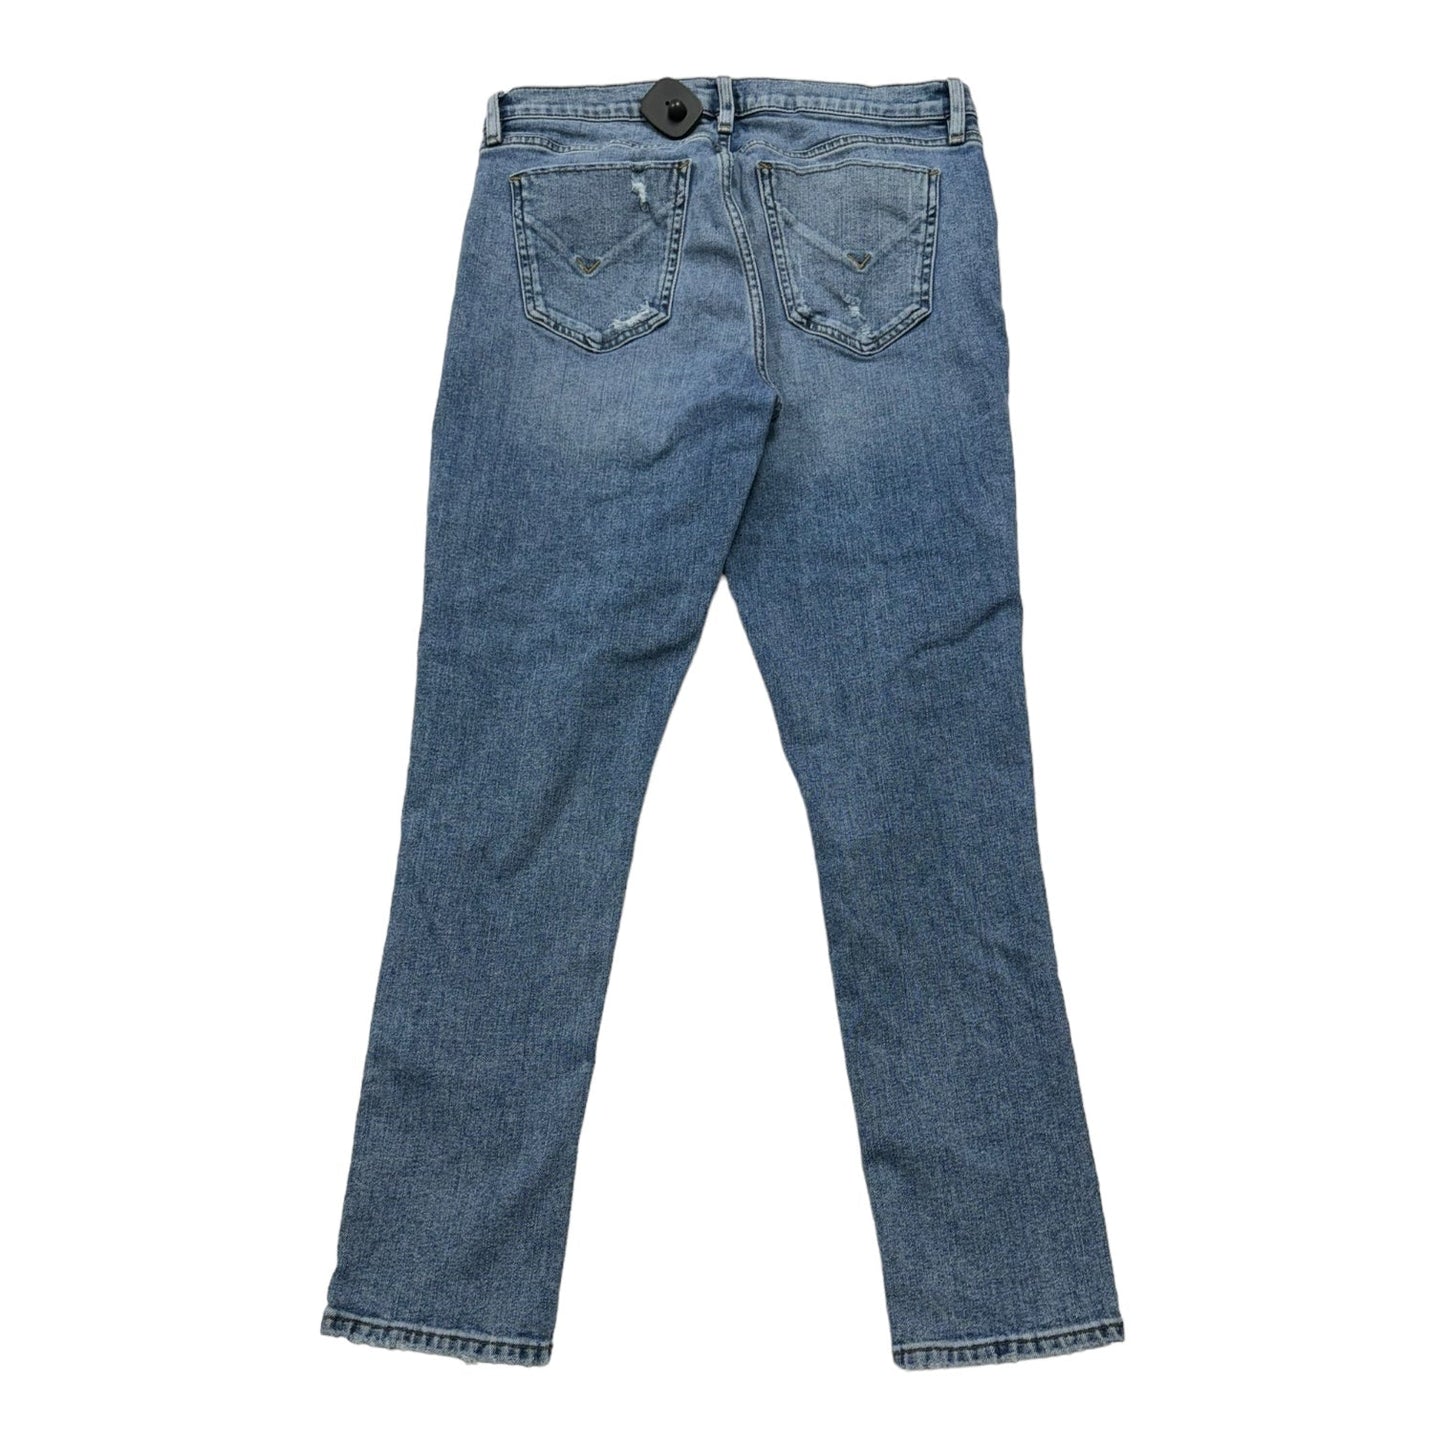 Jeans Boyfriend By Hudson  Size: 8